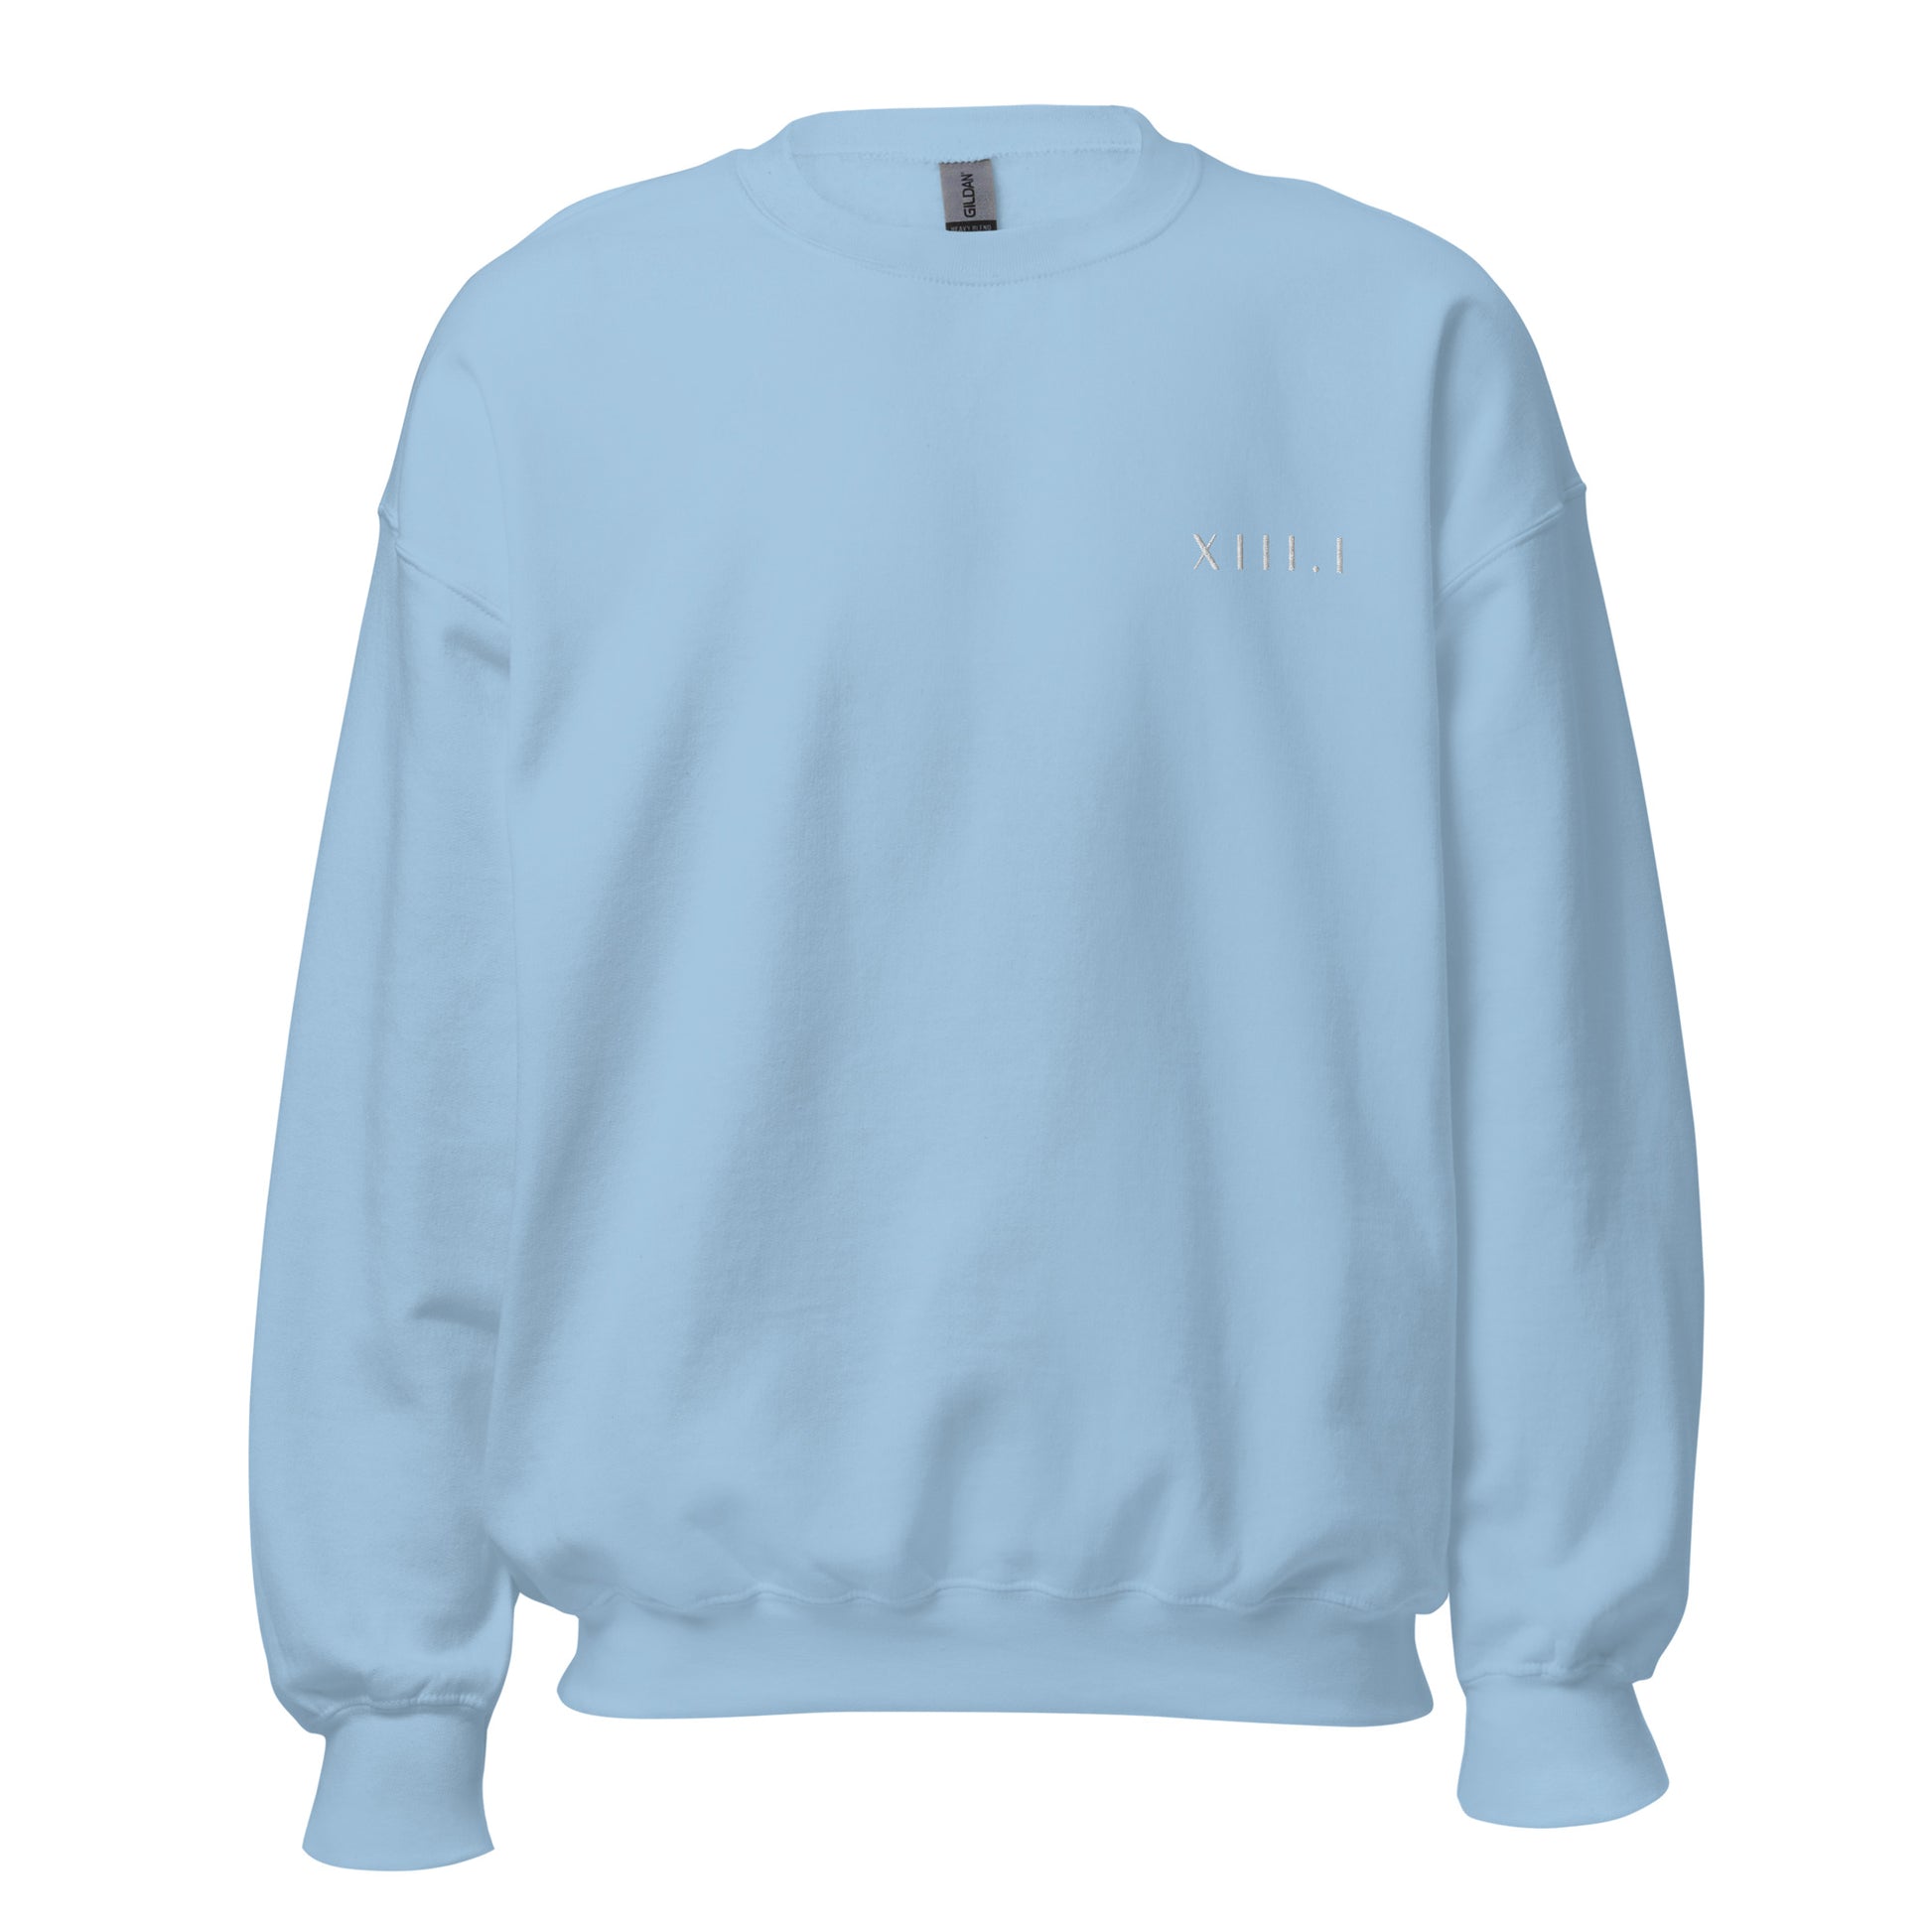 light blue unisex sweatshirt with XIII.I 13.1 half marathon in roman numerals embroidered in white writing